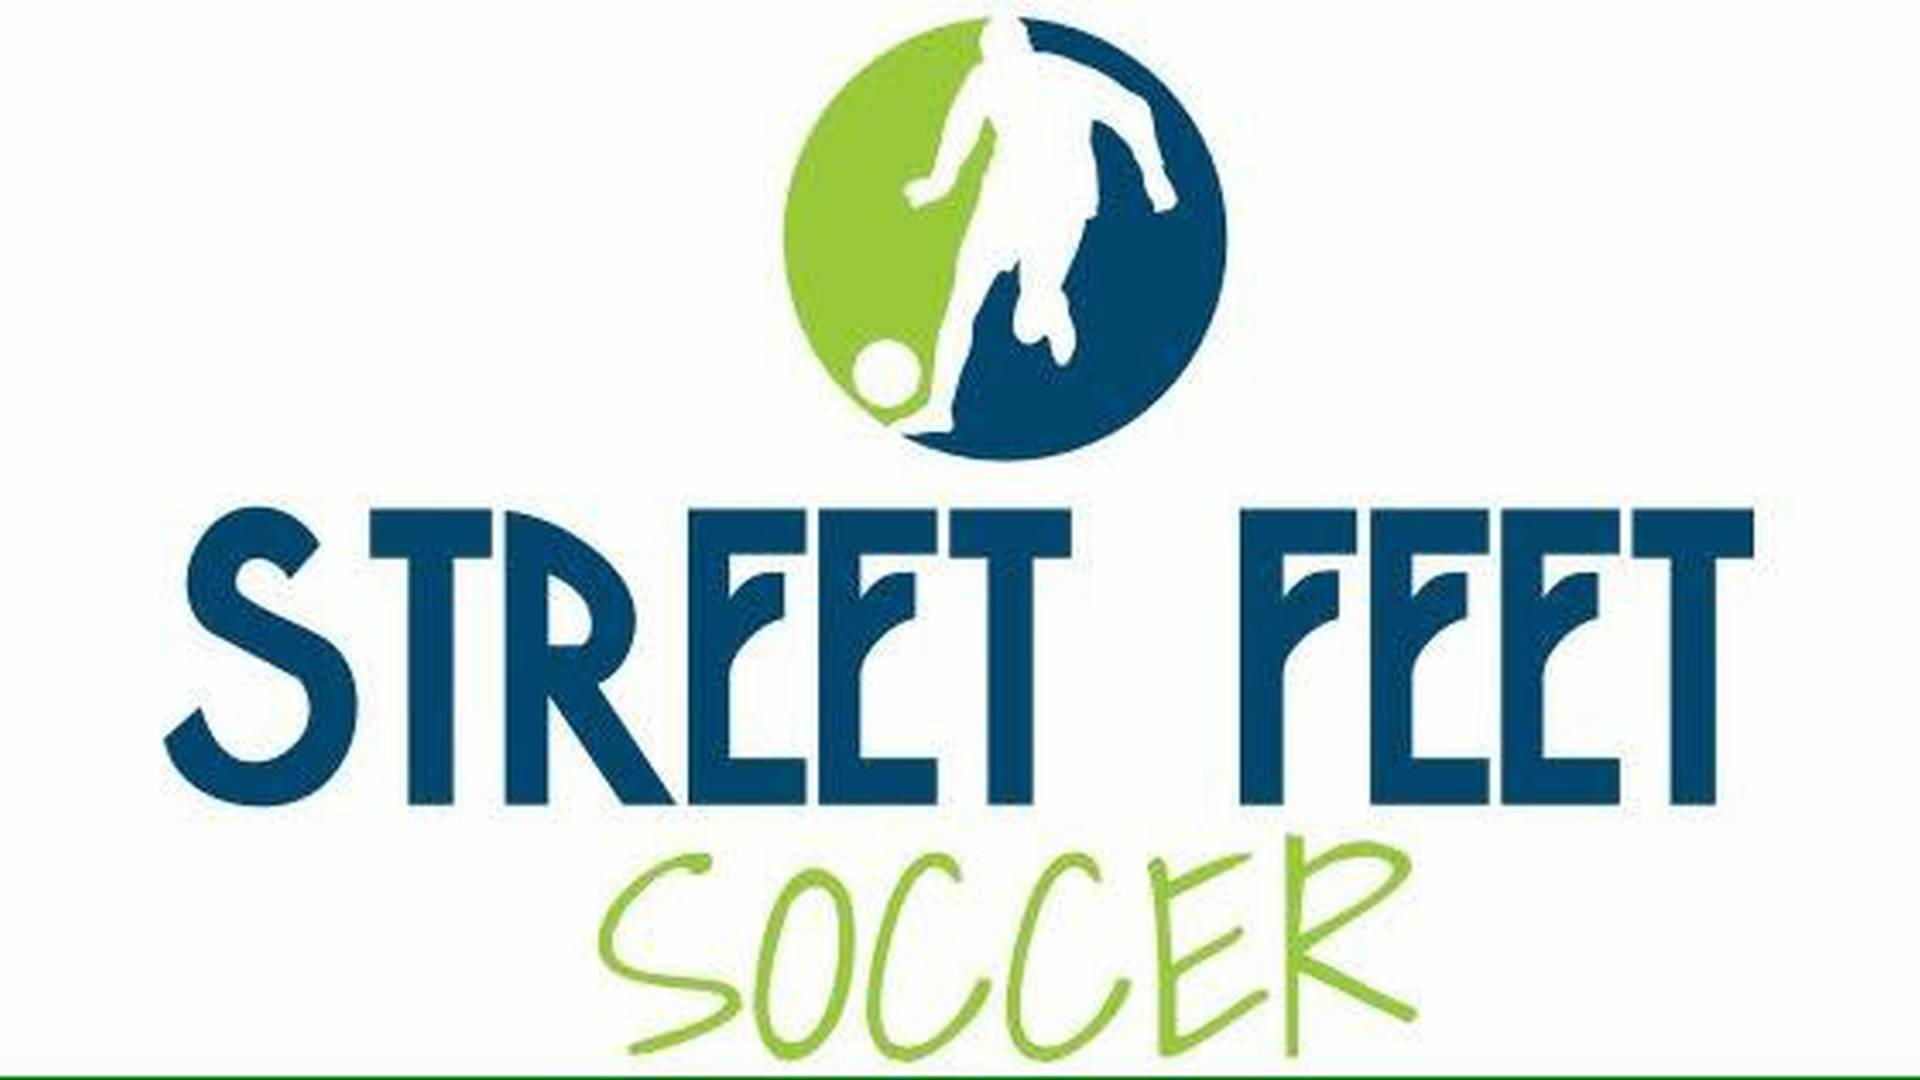 Street Feet Soccer photo